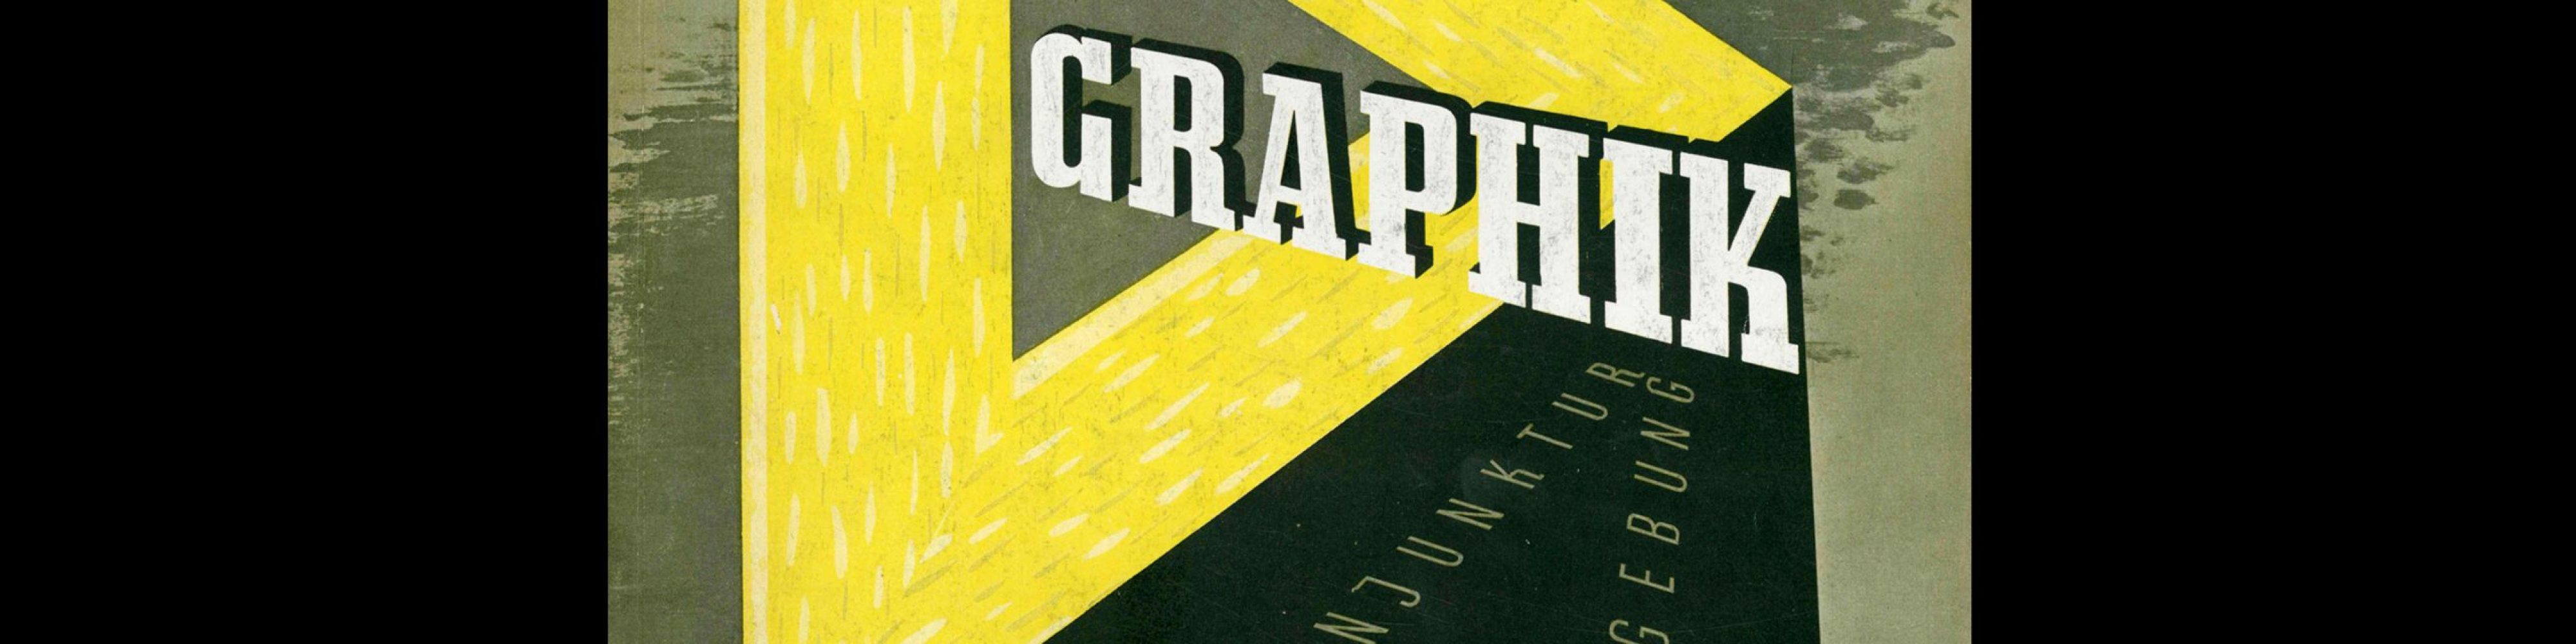 Graphik – Werbung + Formgebung, 10, 1950